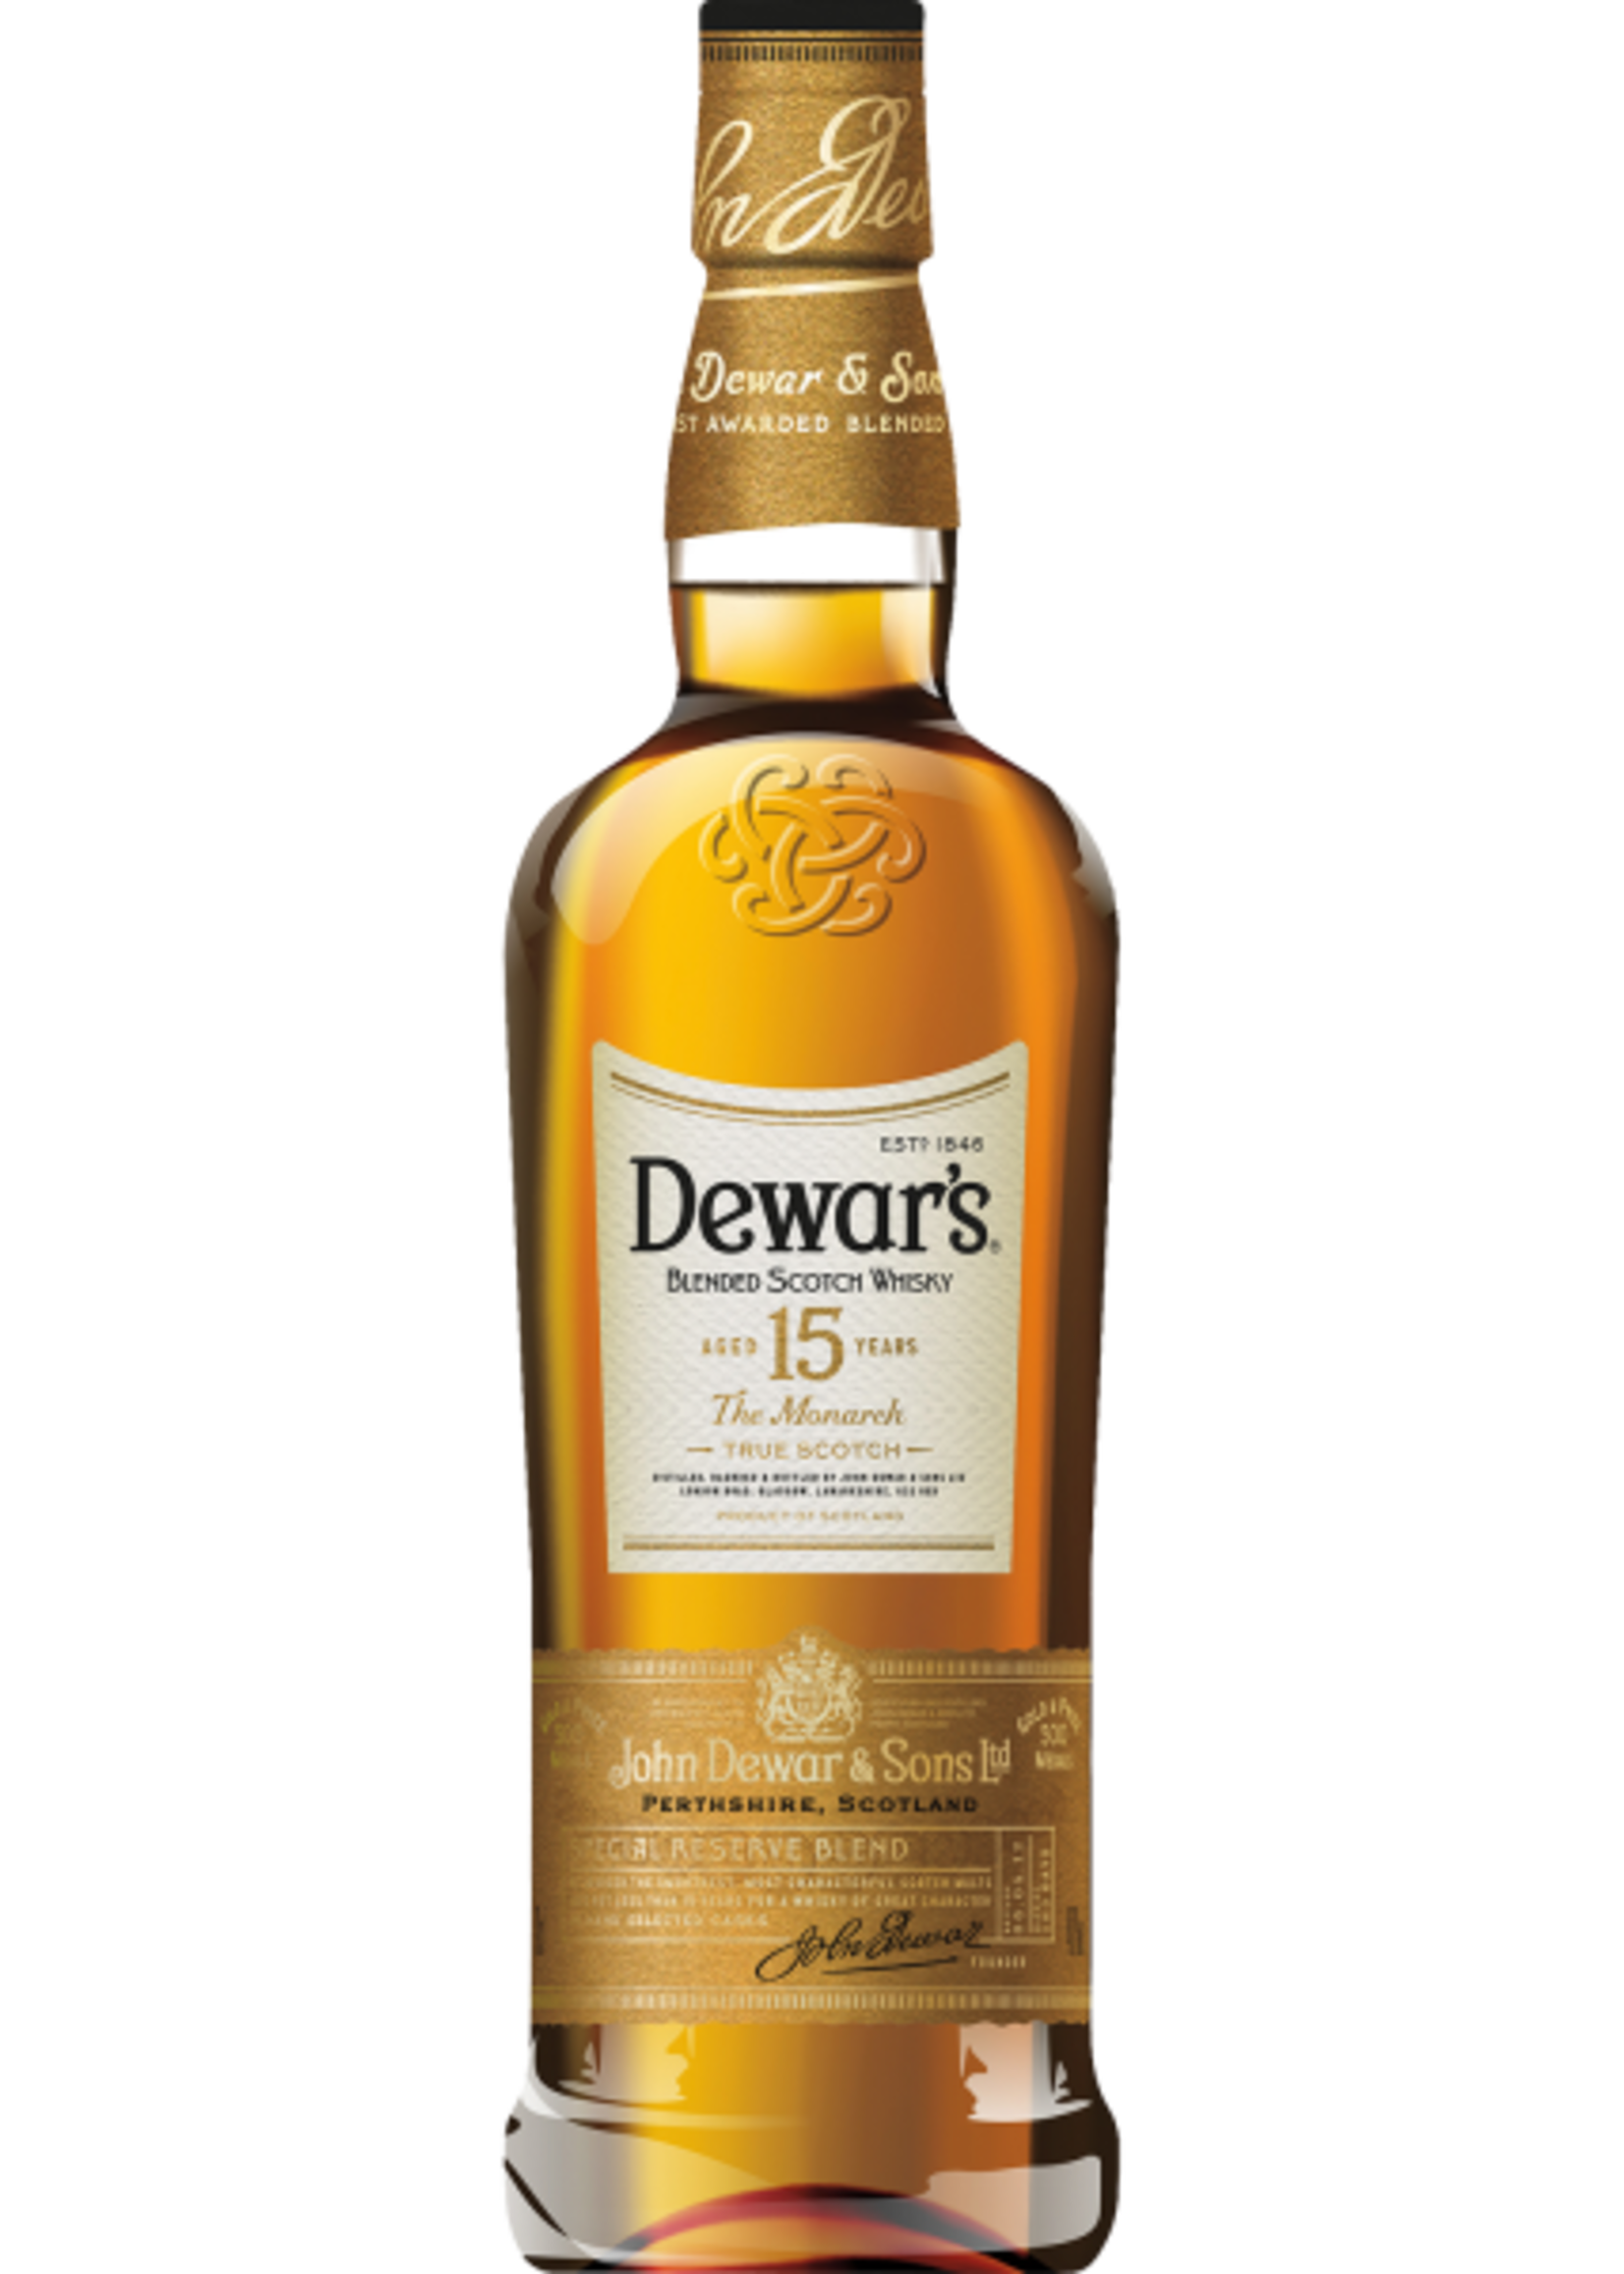 Dewar's Dewar’s / 15 Year Double Aged Blended Scotch Whisky 40% abv / 1.0L